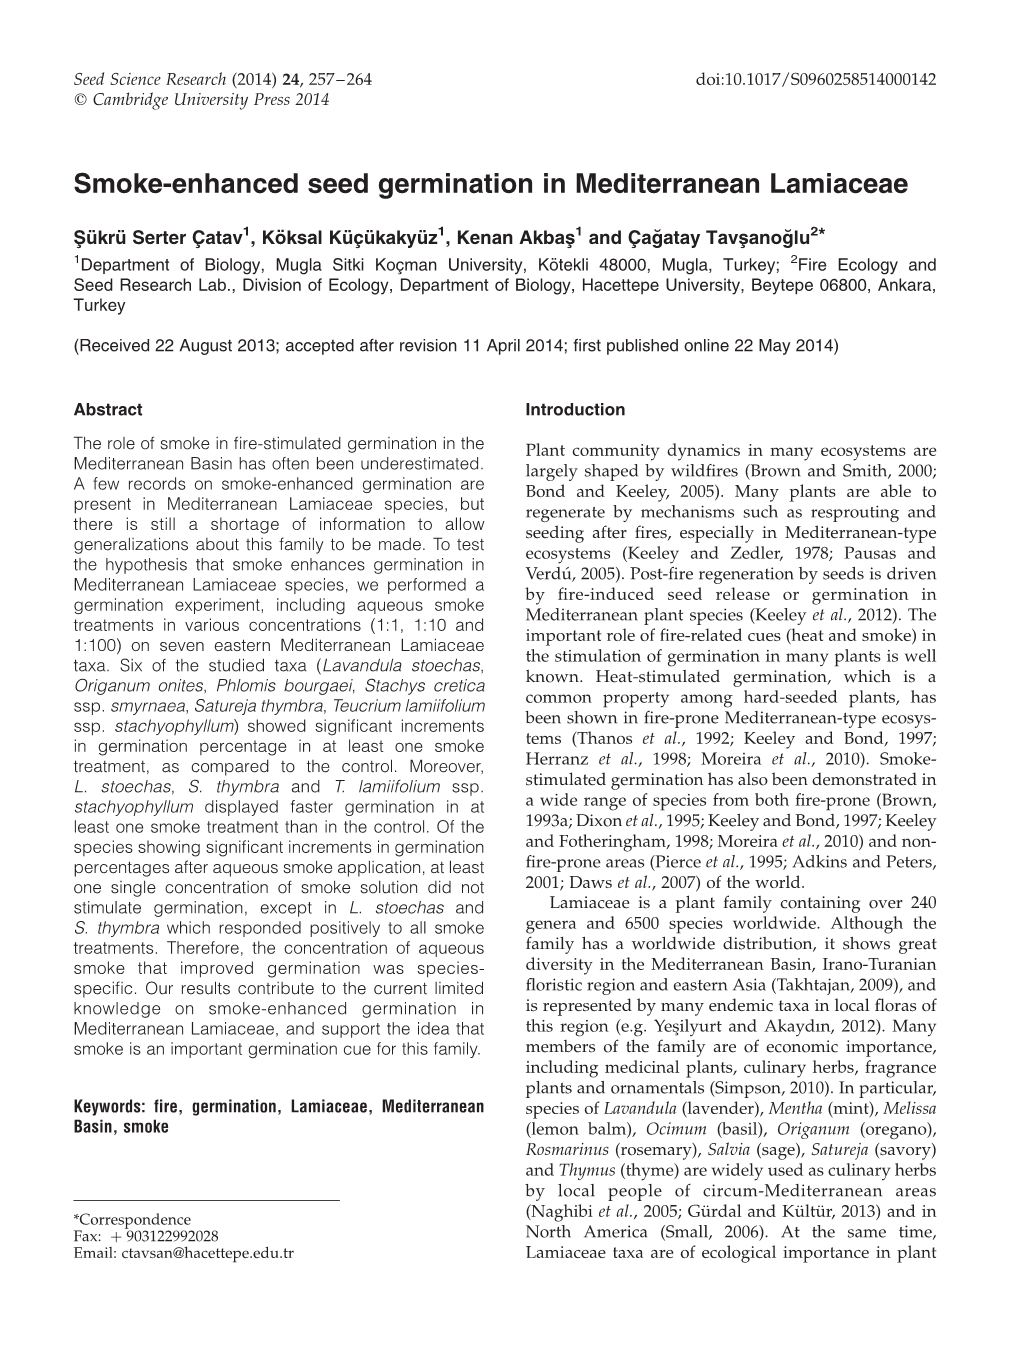 Smoke-Enhanced Seed Germination in Mediterranean Lamiaceae